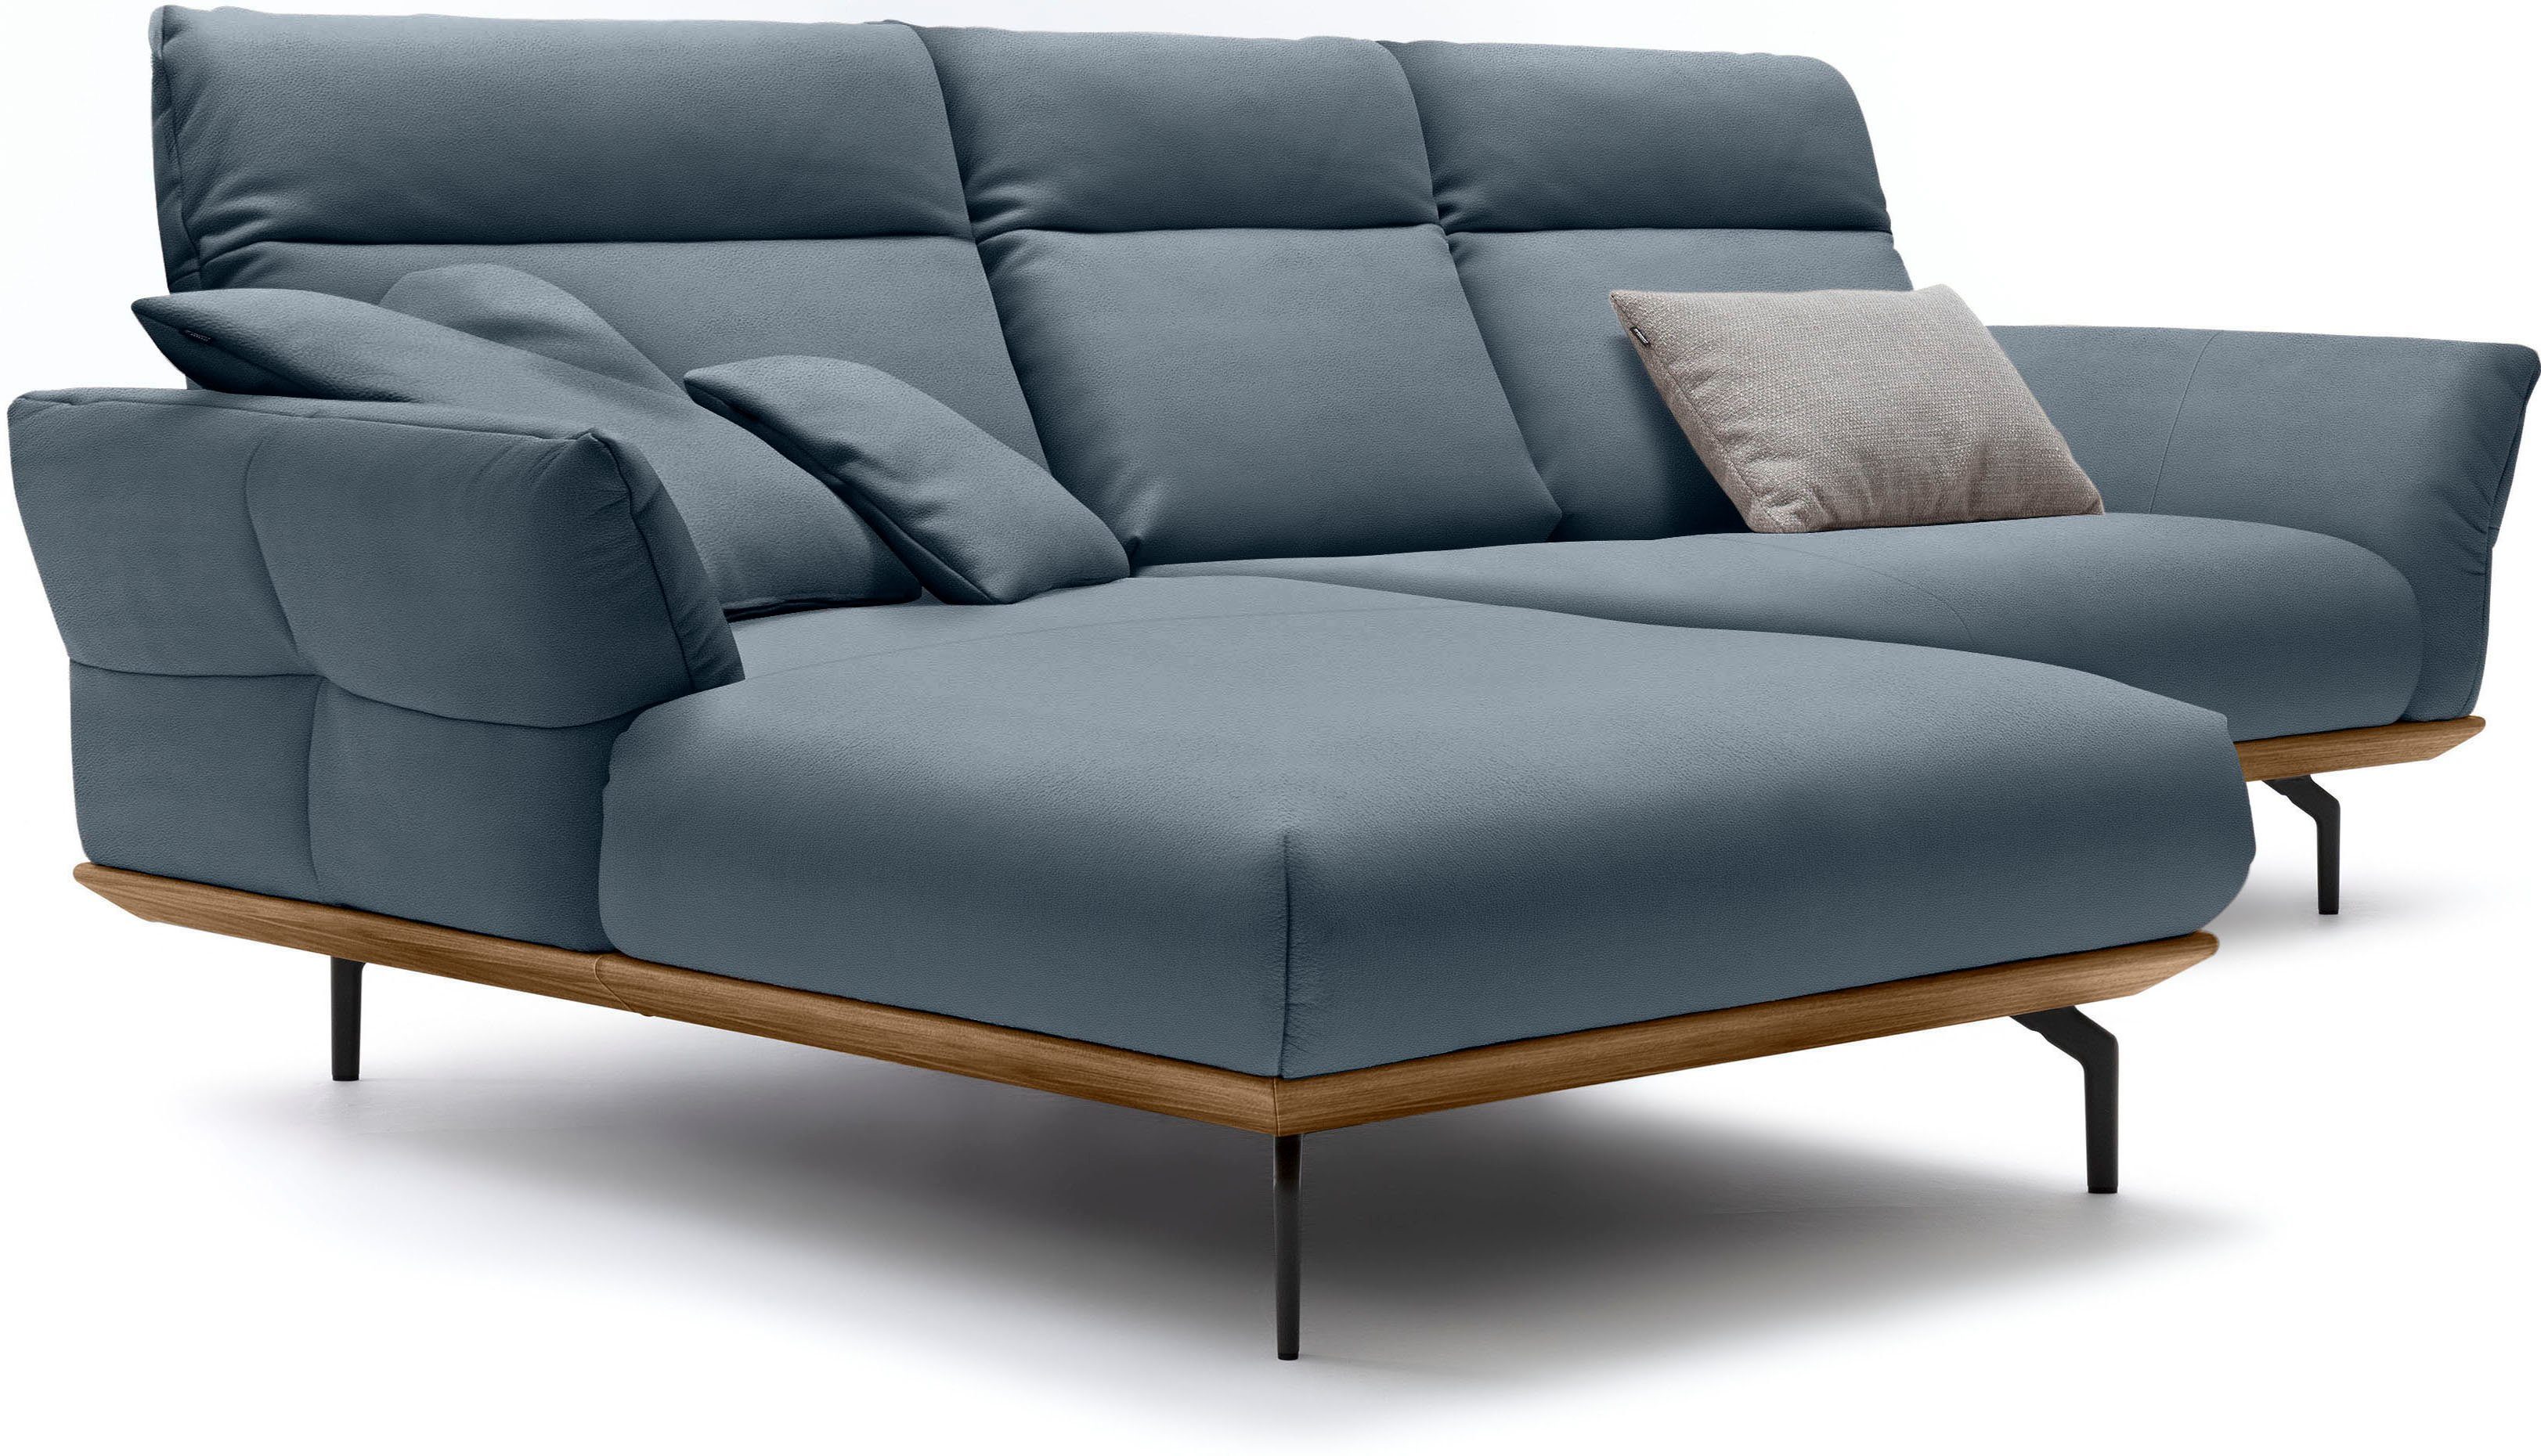 Winkelfüße Ecksofa in sofa in cm hs.460, 298 Nussbaum, Sockel Umbragrau, hülsta Breite